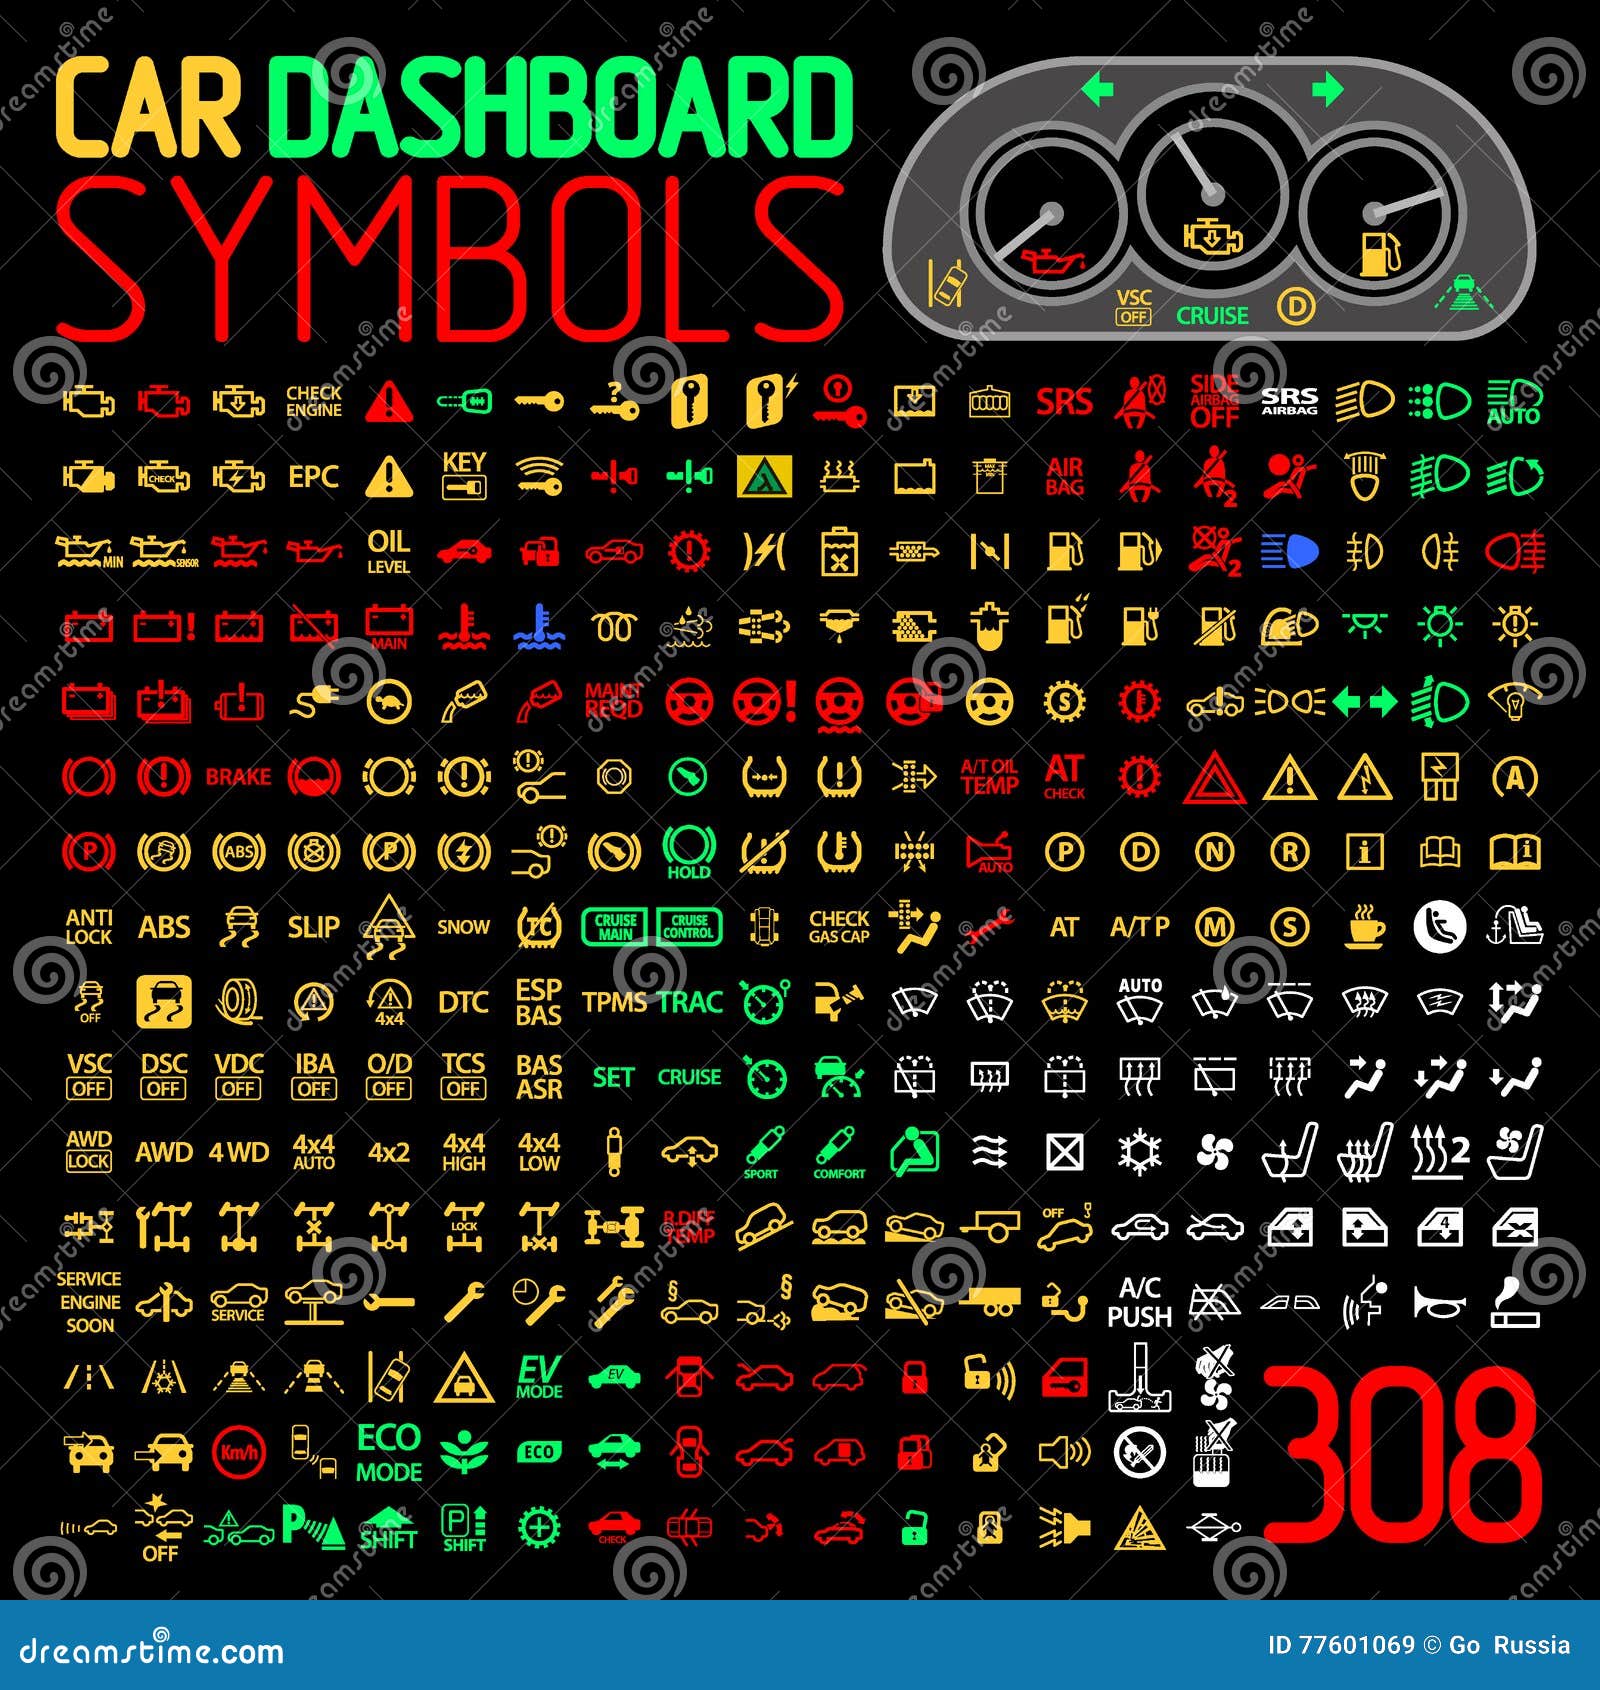 Dashboard Lights Stock Illustrations – 150 Dashboard Warning Lights Stock Illustrations, & - Dreamstime